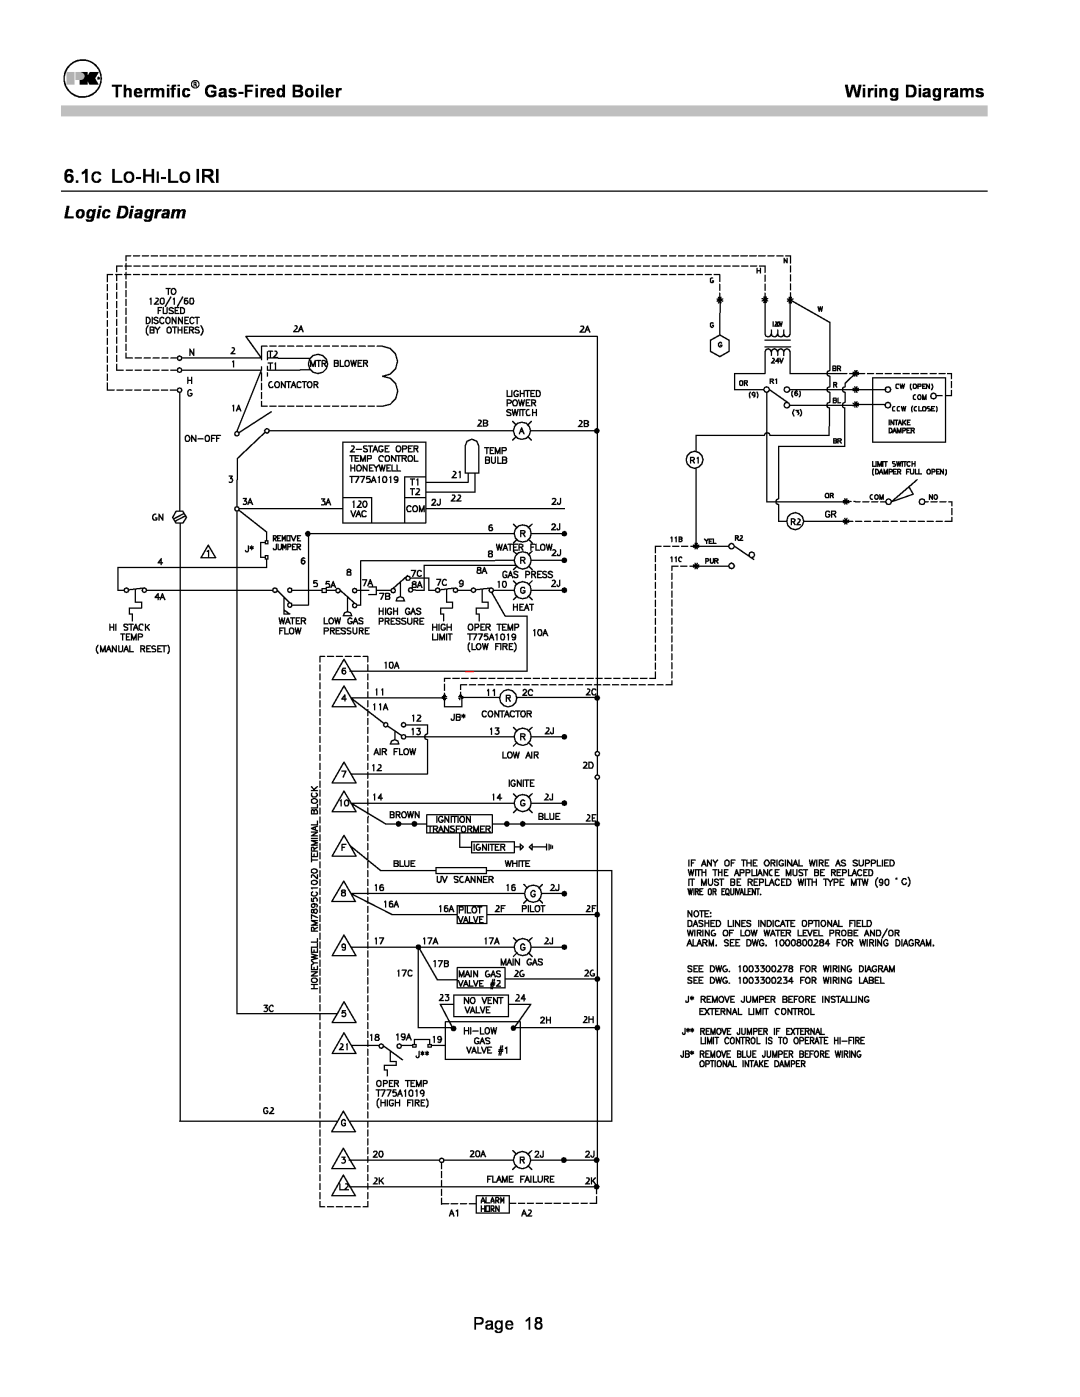 Patterson-Kelley DVSCM-02 owner manual 6.1C LO-HI-LO IRI, Thermific Gas-FiredBoiler, Wiring Diagrams, Logic Diagram 